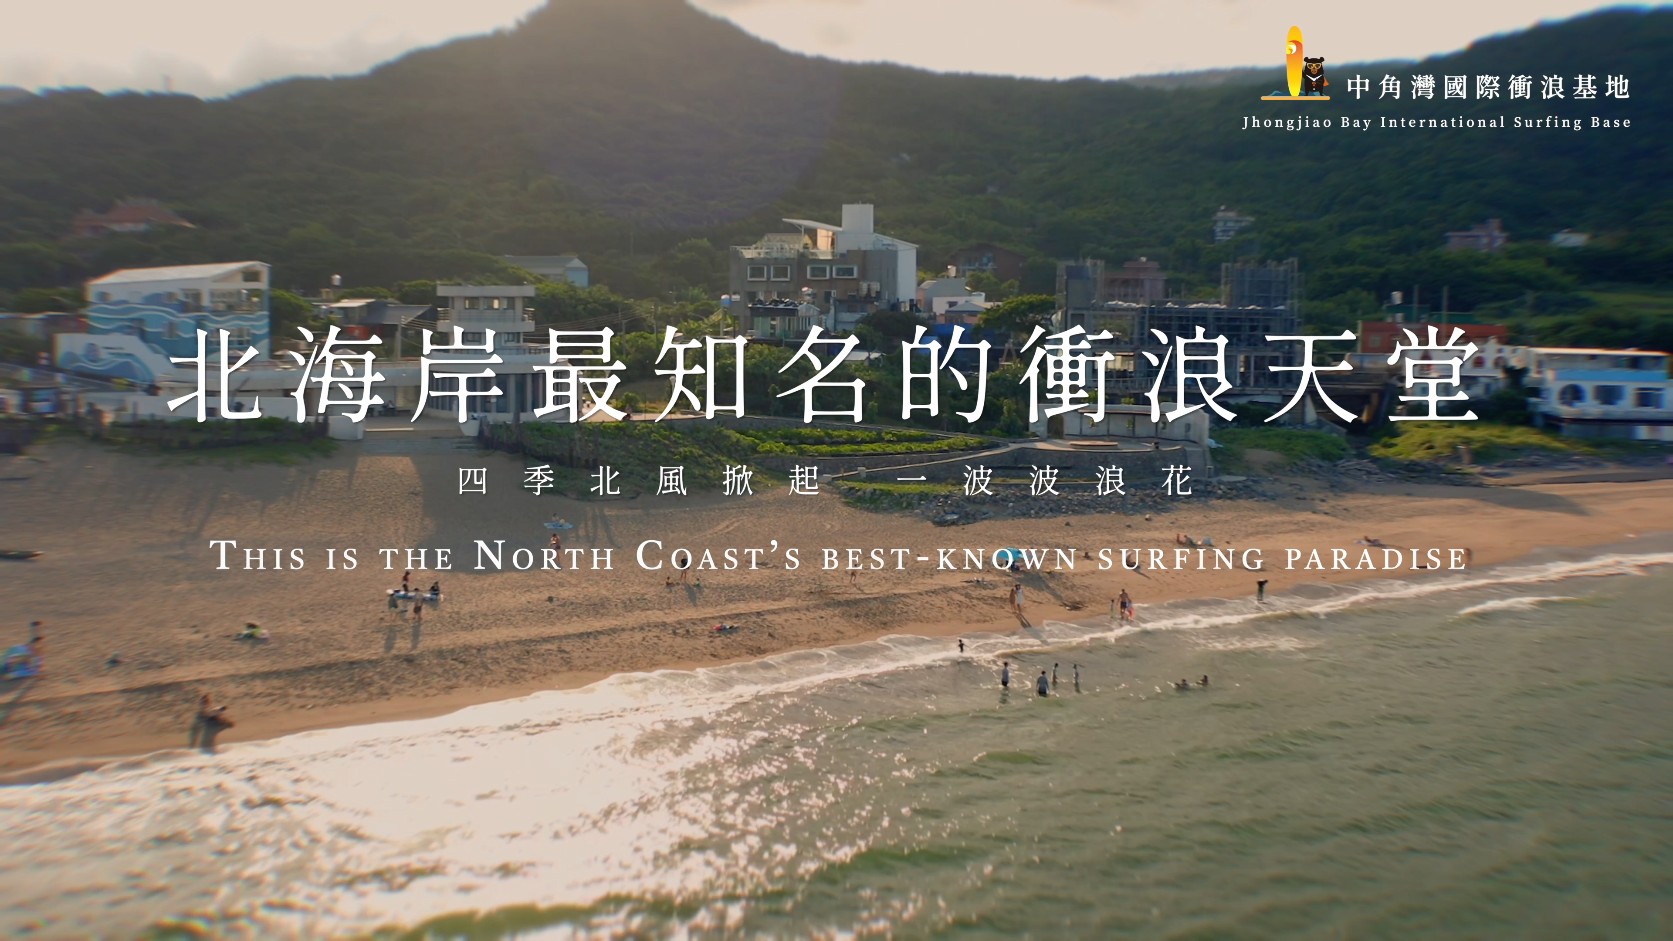  Jhongjiao Bay Surfing Promotional Video